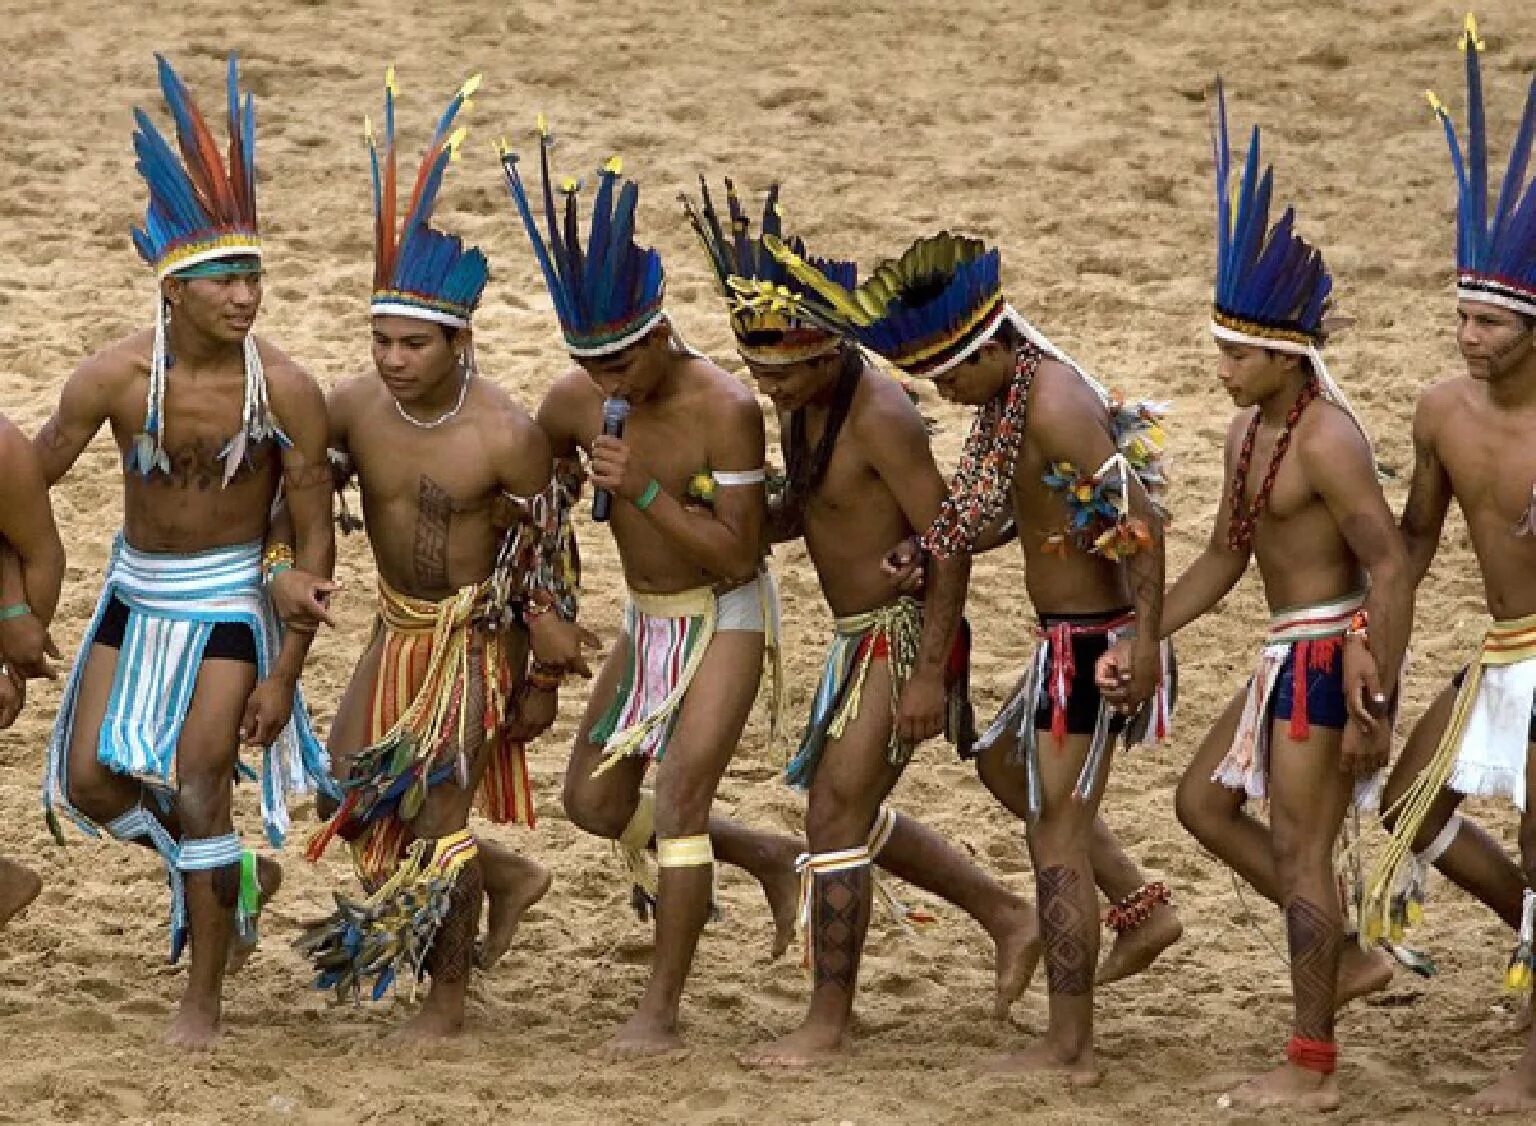 Коренные индейцы Южной Америки. Танцы индейцев Южной Америки. Индейцы Южной Африки. Индейцы аборигены. Tribe people